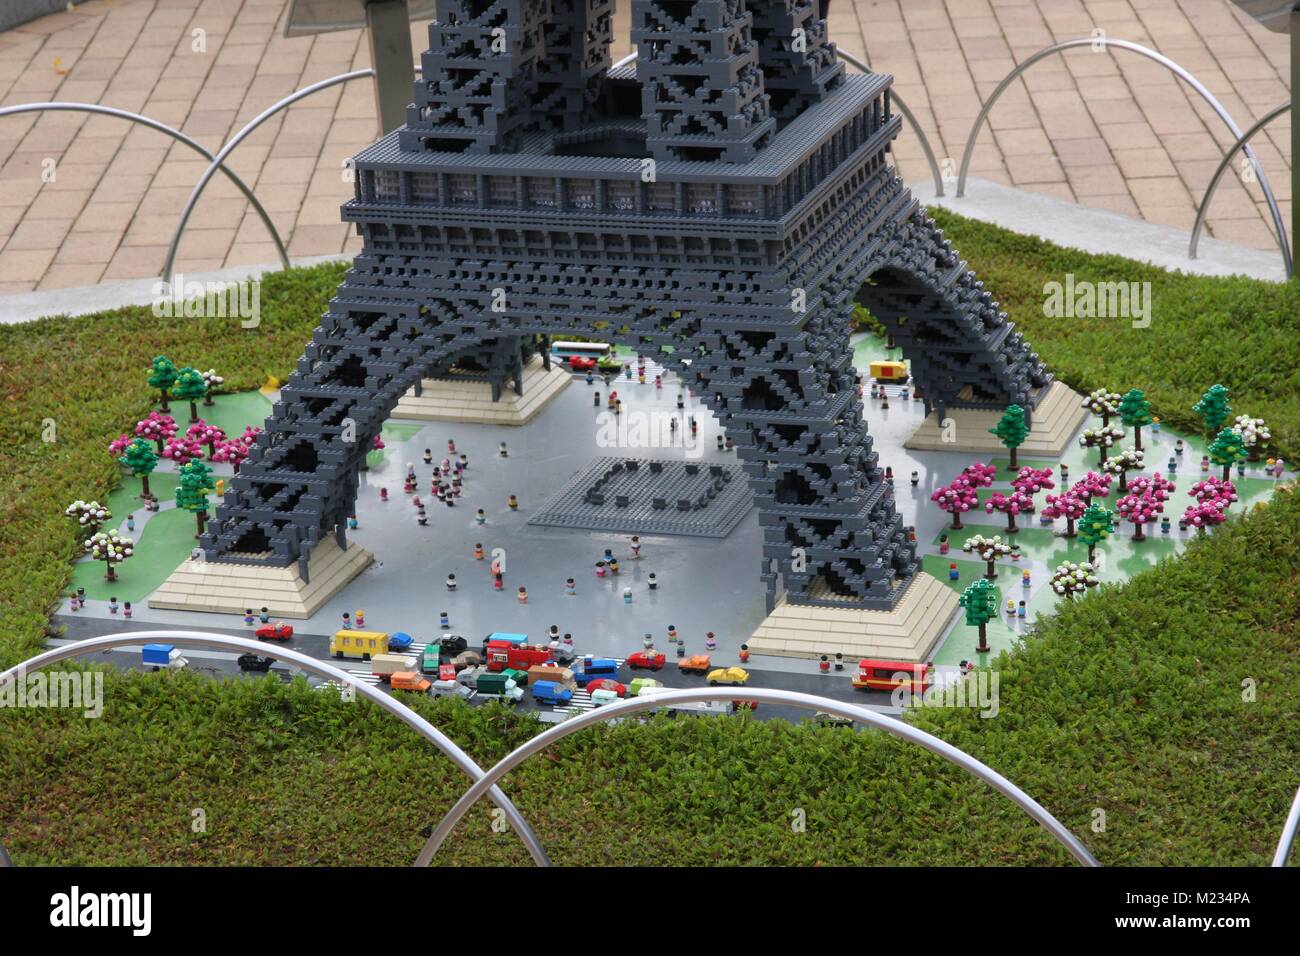 Lego Eiffel Tower - LEGOLAND Billund, Denmark Stock Photo - Alamy